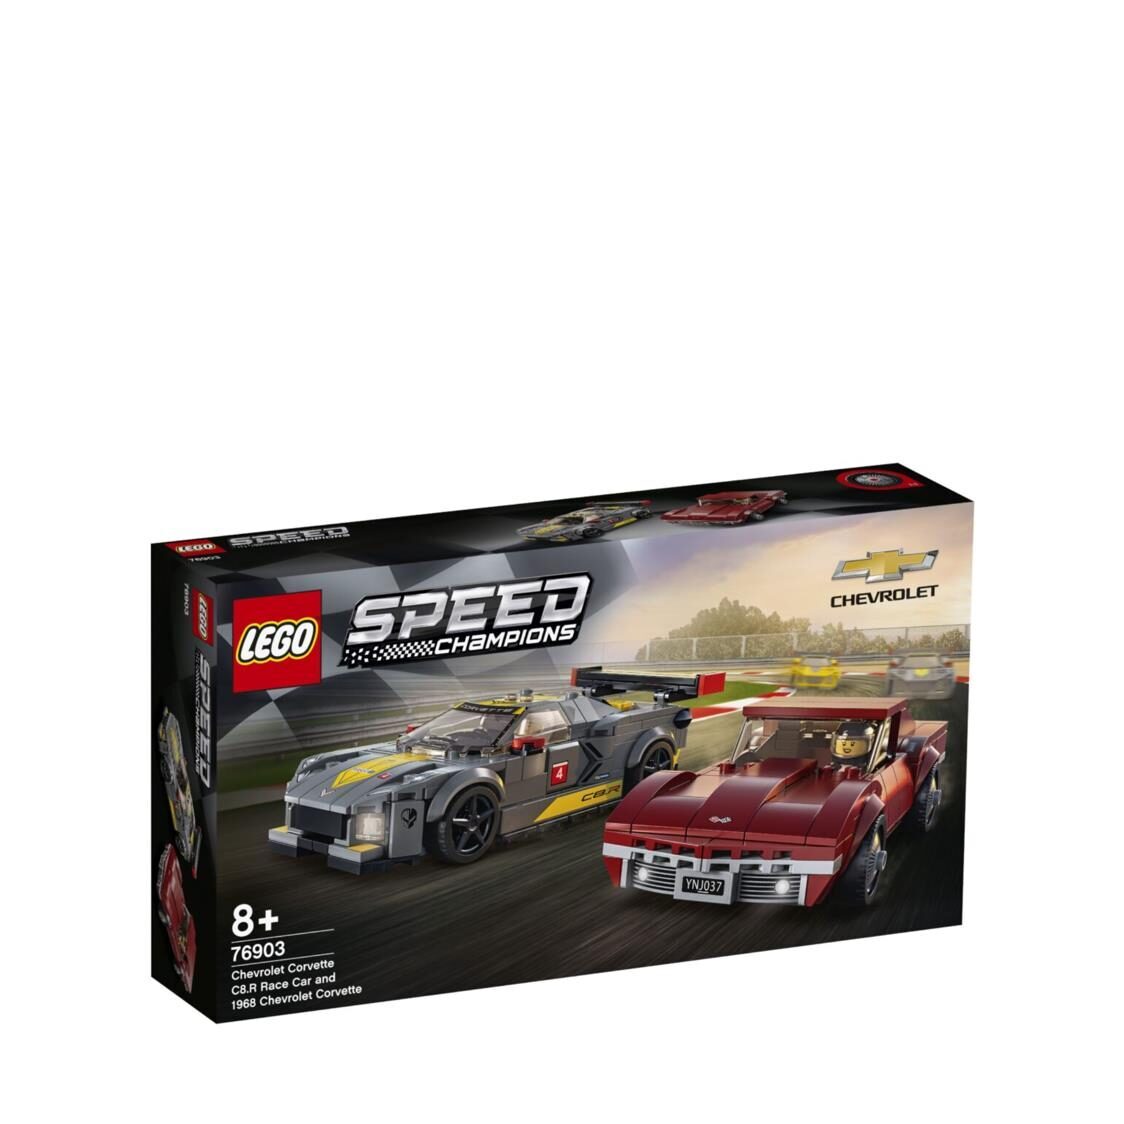 LEGO Speed Champions - Chevrolet Corvette C8R Race Car and 196 76903